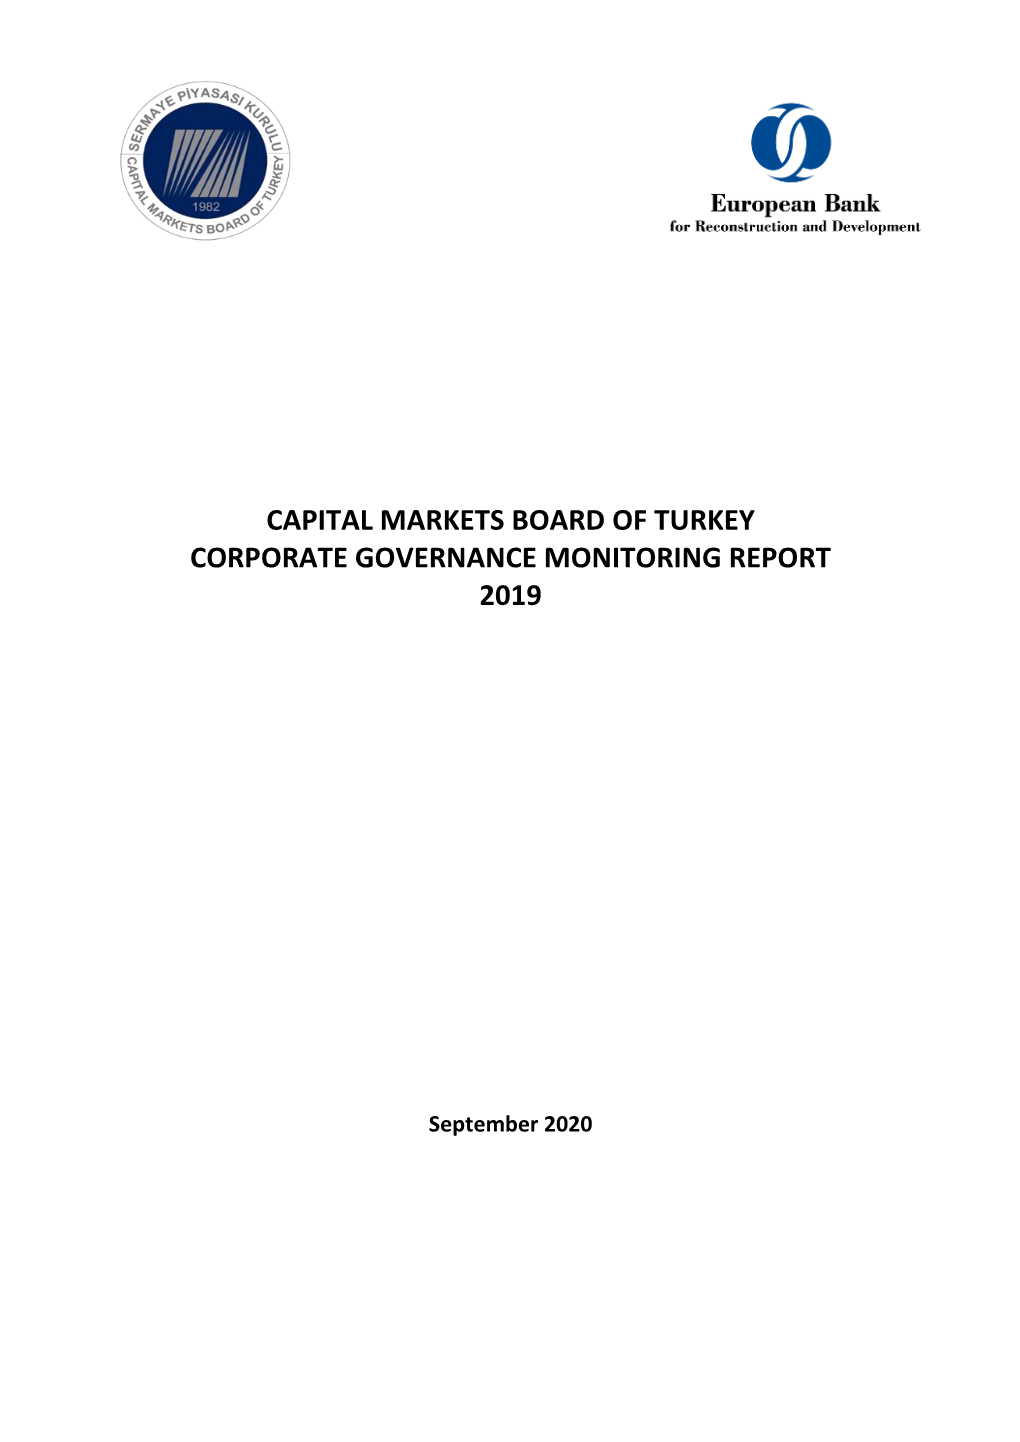 Capital Markets Board of Turkey Corporate Governance Monitoring Report 2019